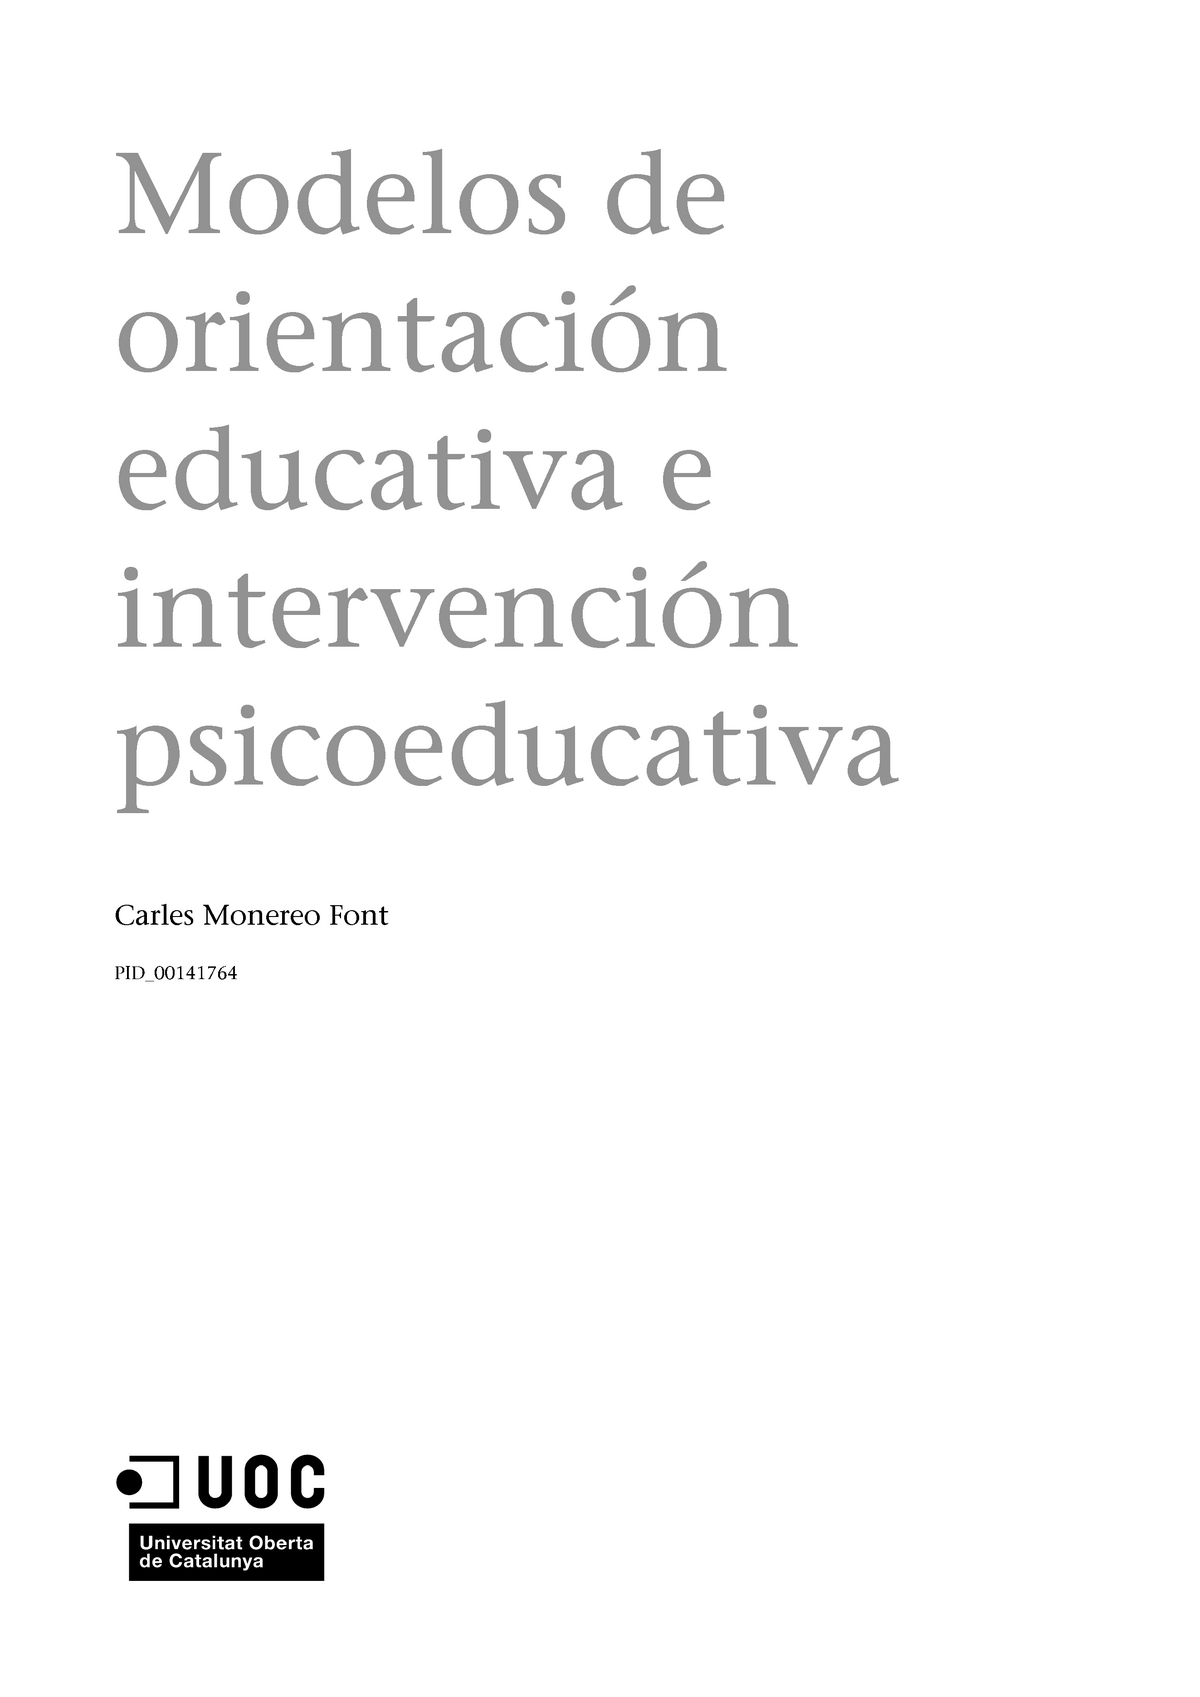 Módulo 1. Modelos de orientación educativa e intervención psicoeducativa -  Modelos de orientación - Studocu